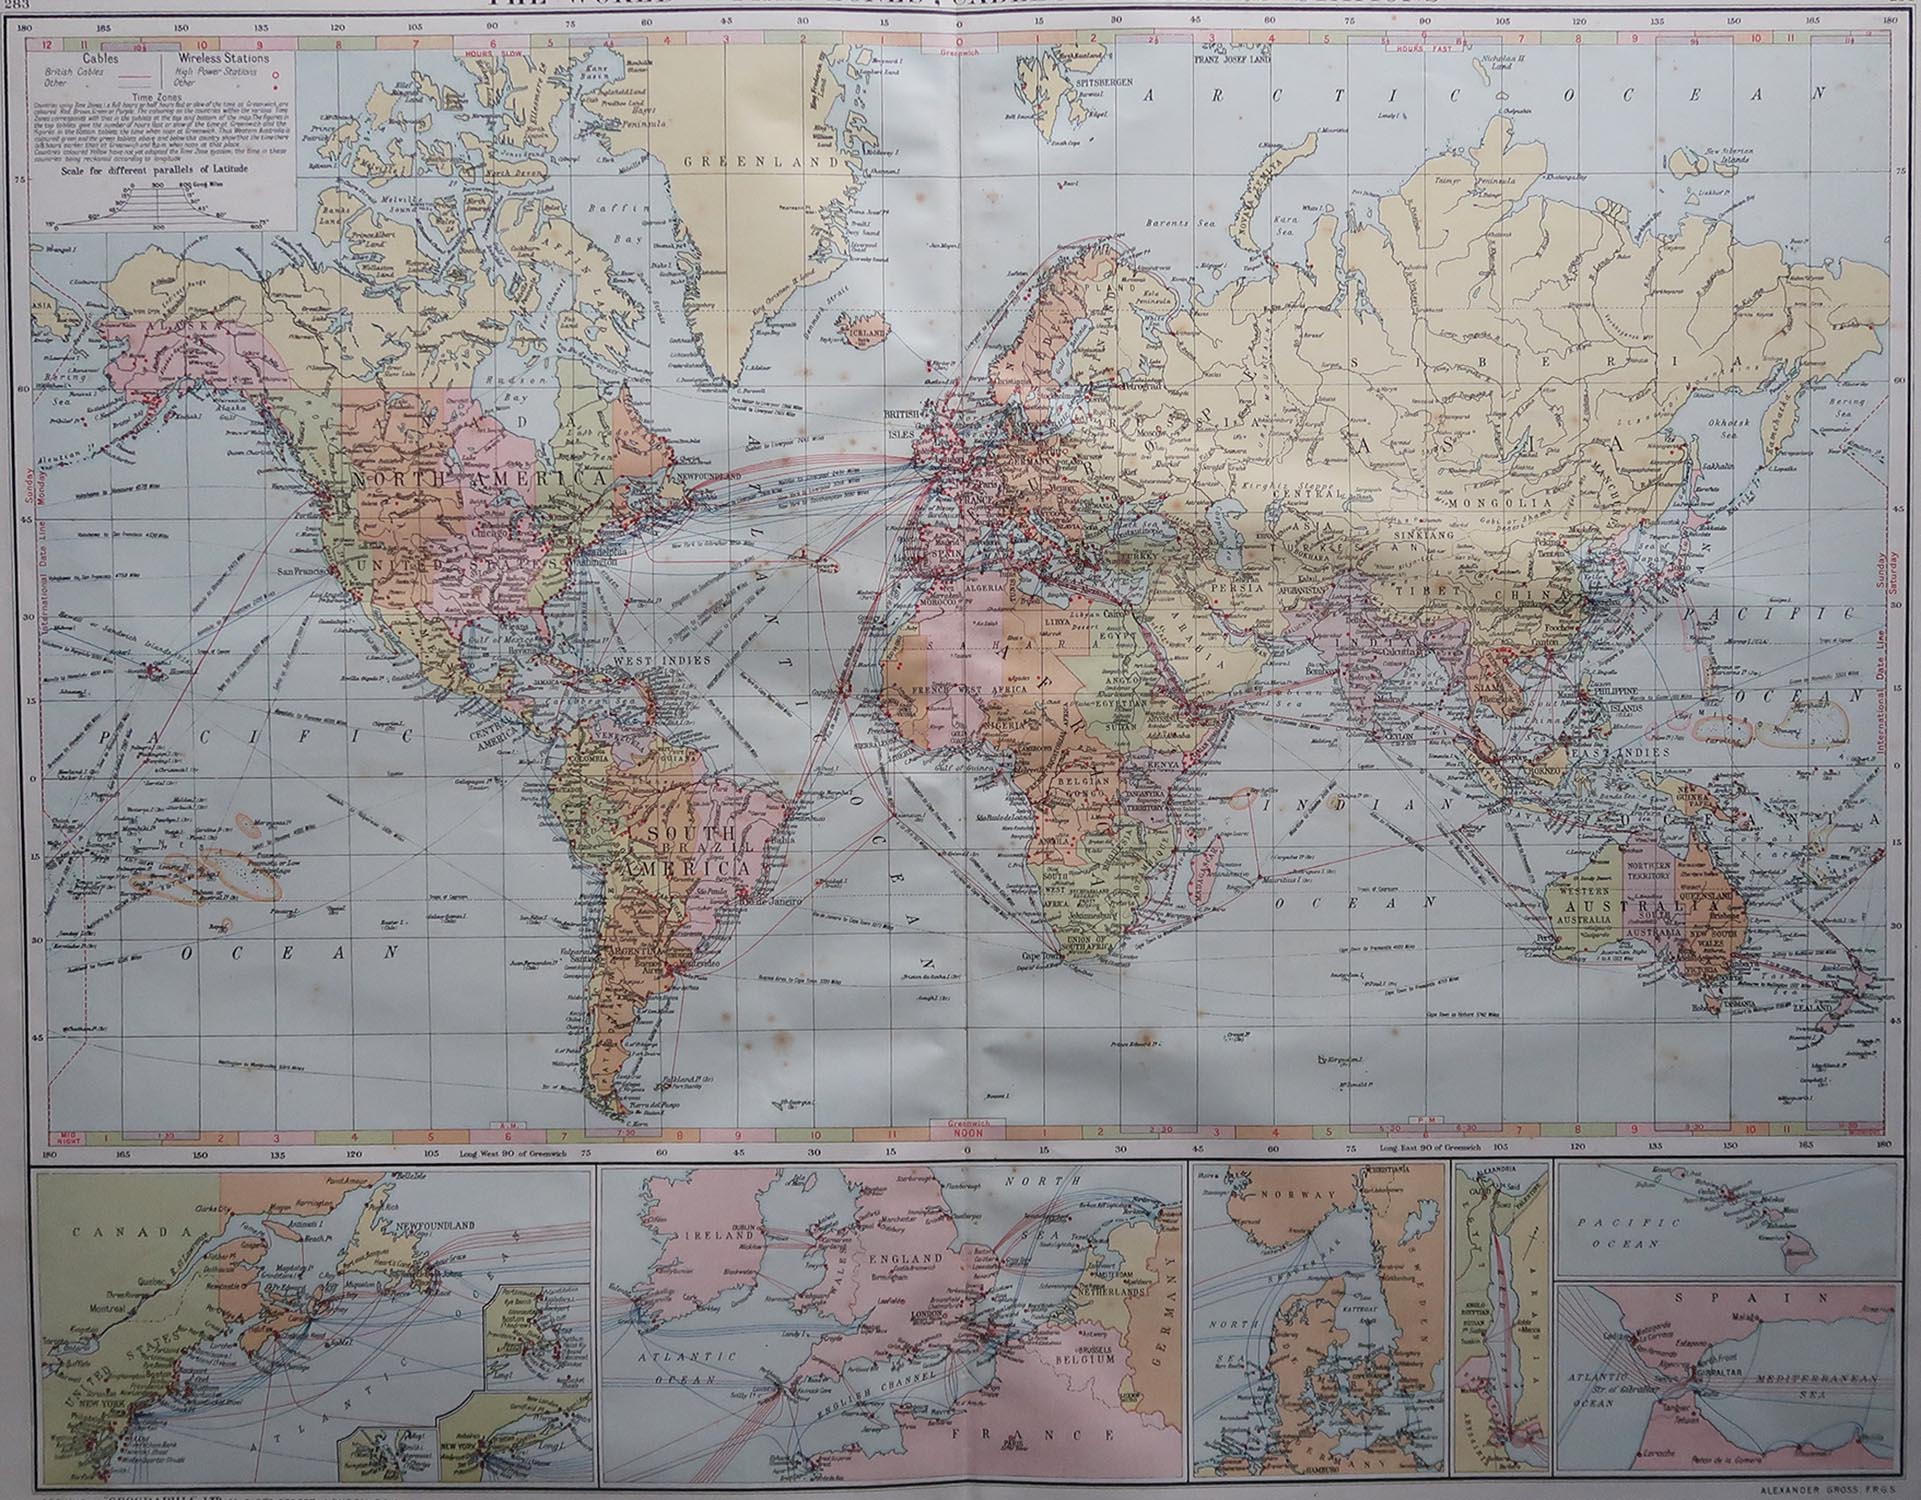 Grande carte originale du monde, datant d'environ 1920